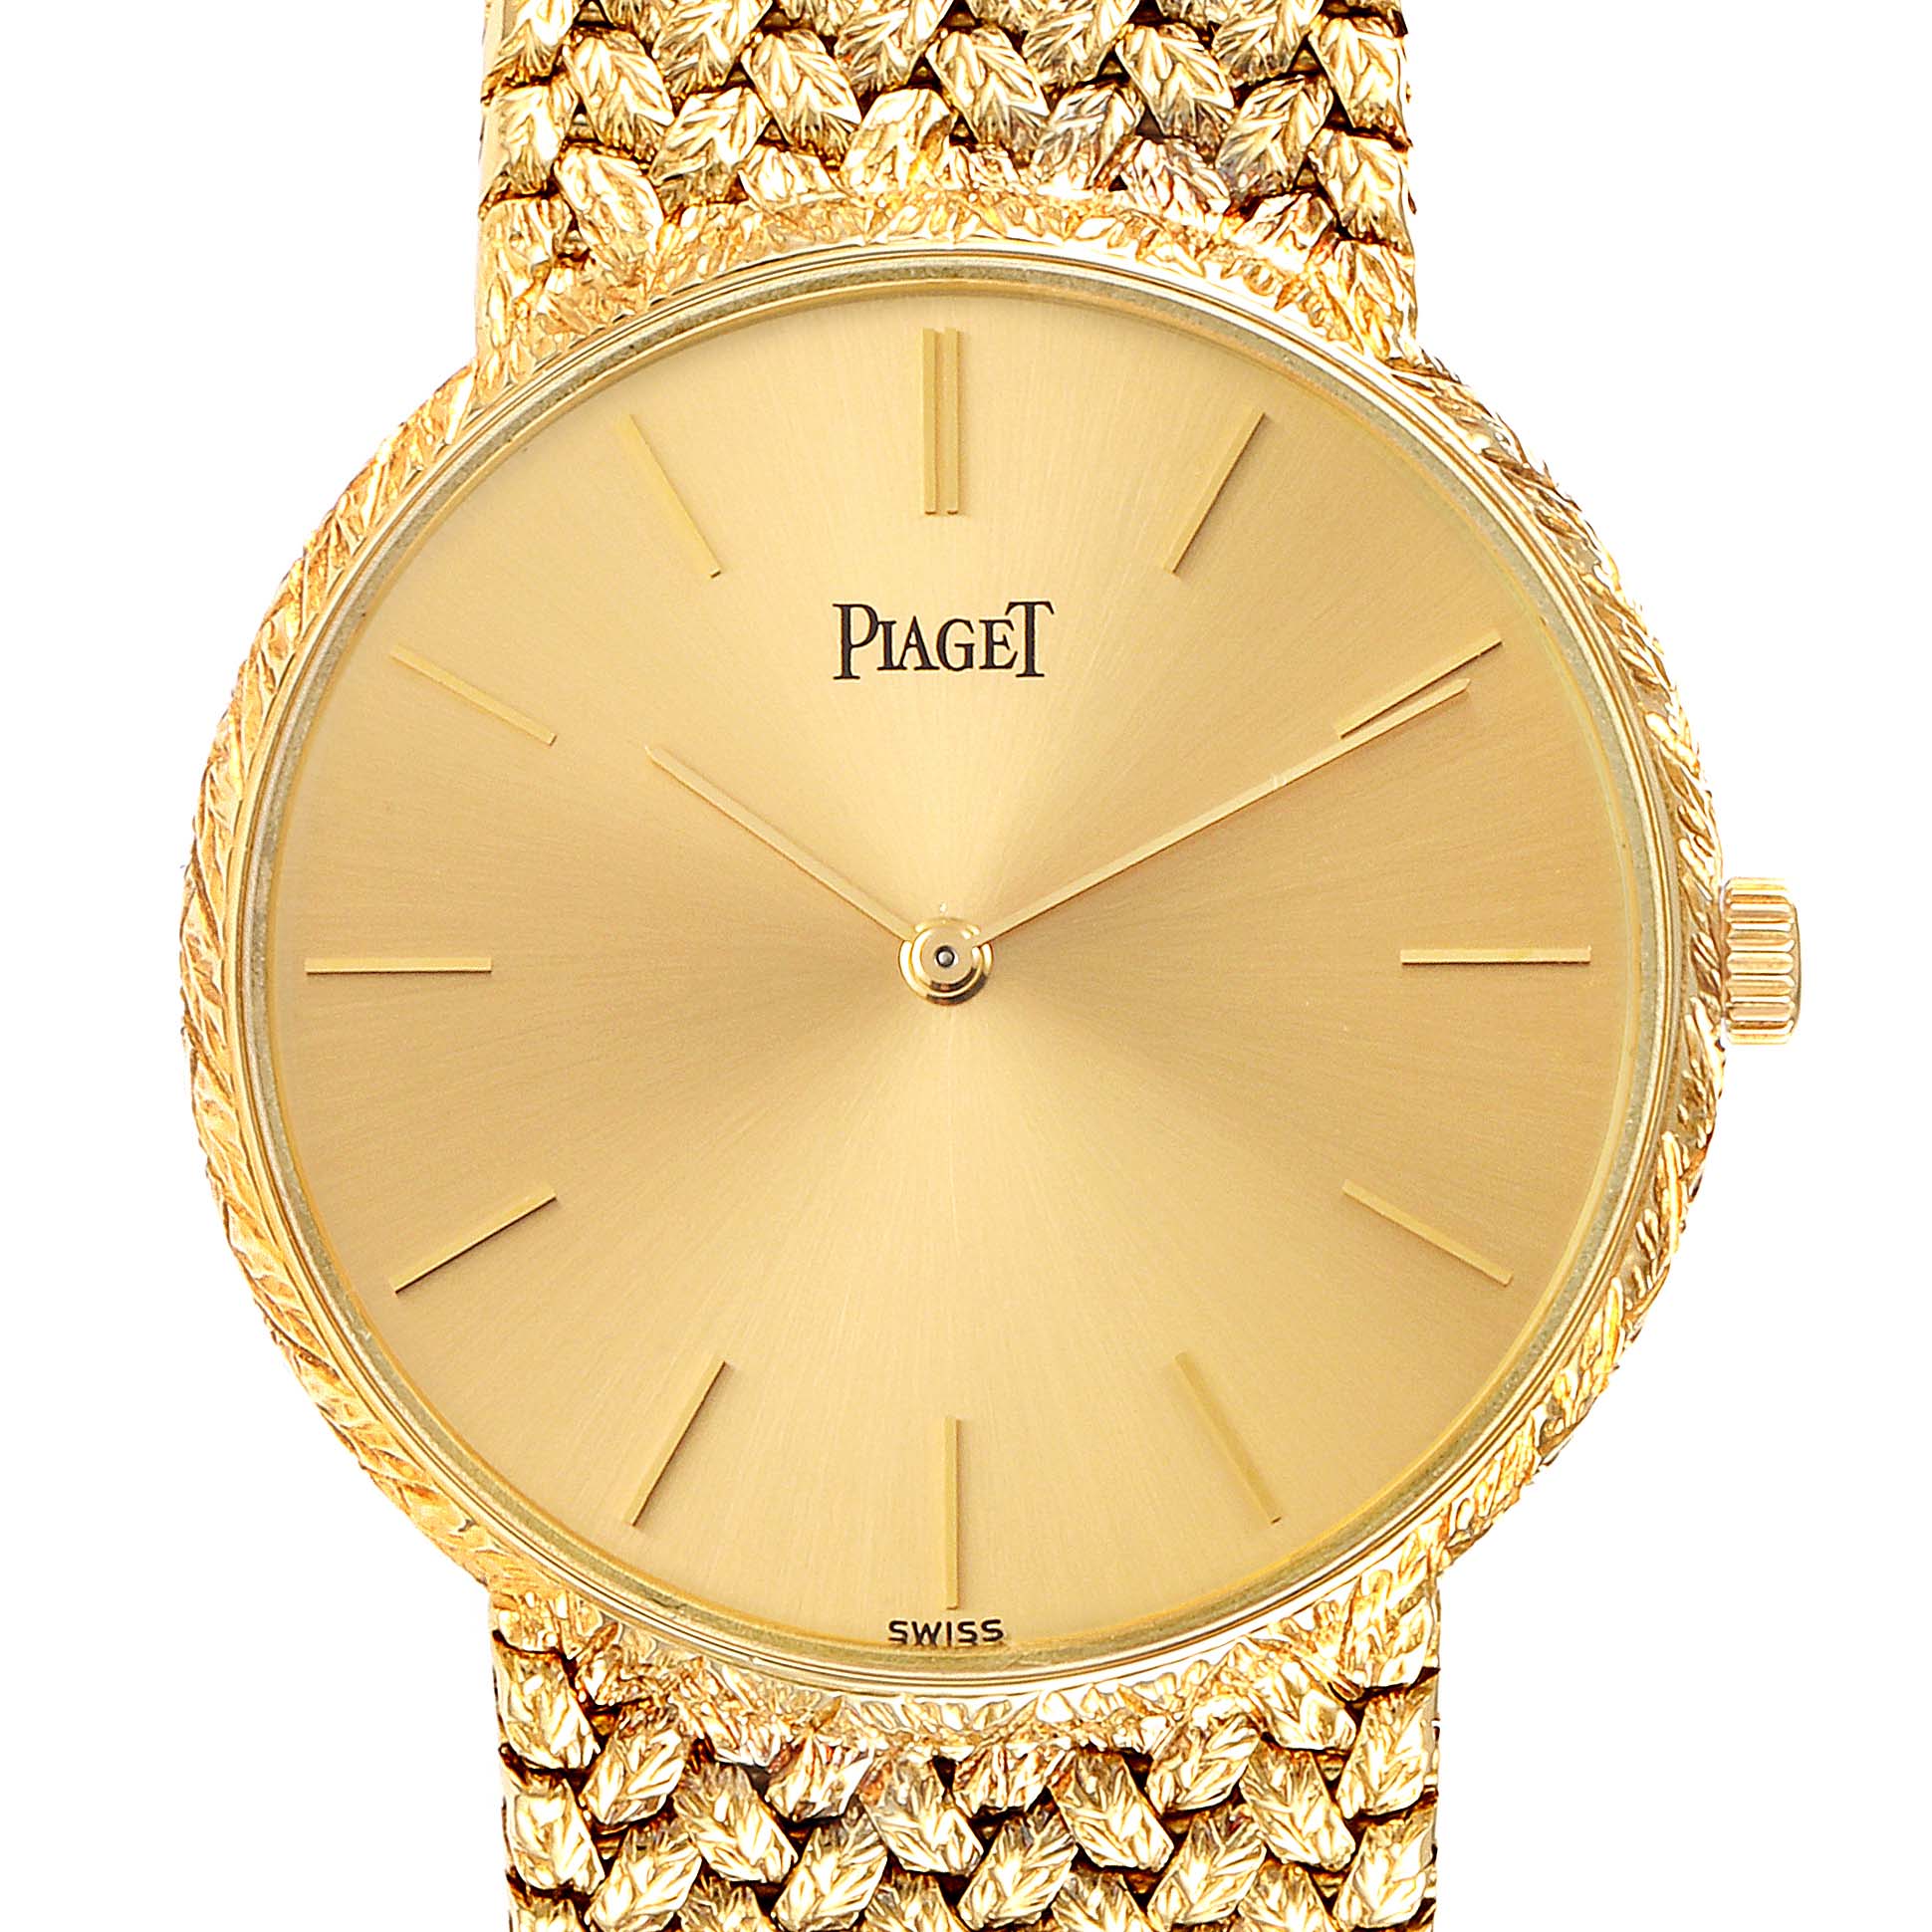 Piaget Mens 18k Gold Watch Discount | bellvalefarms.com